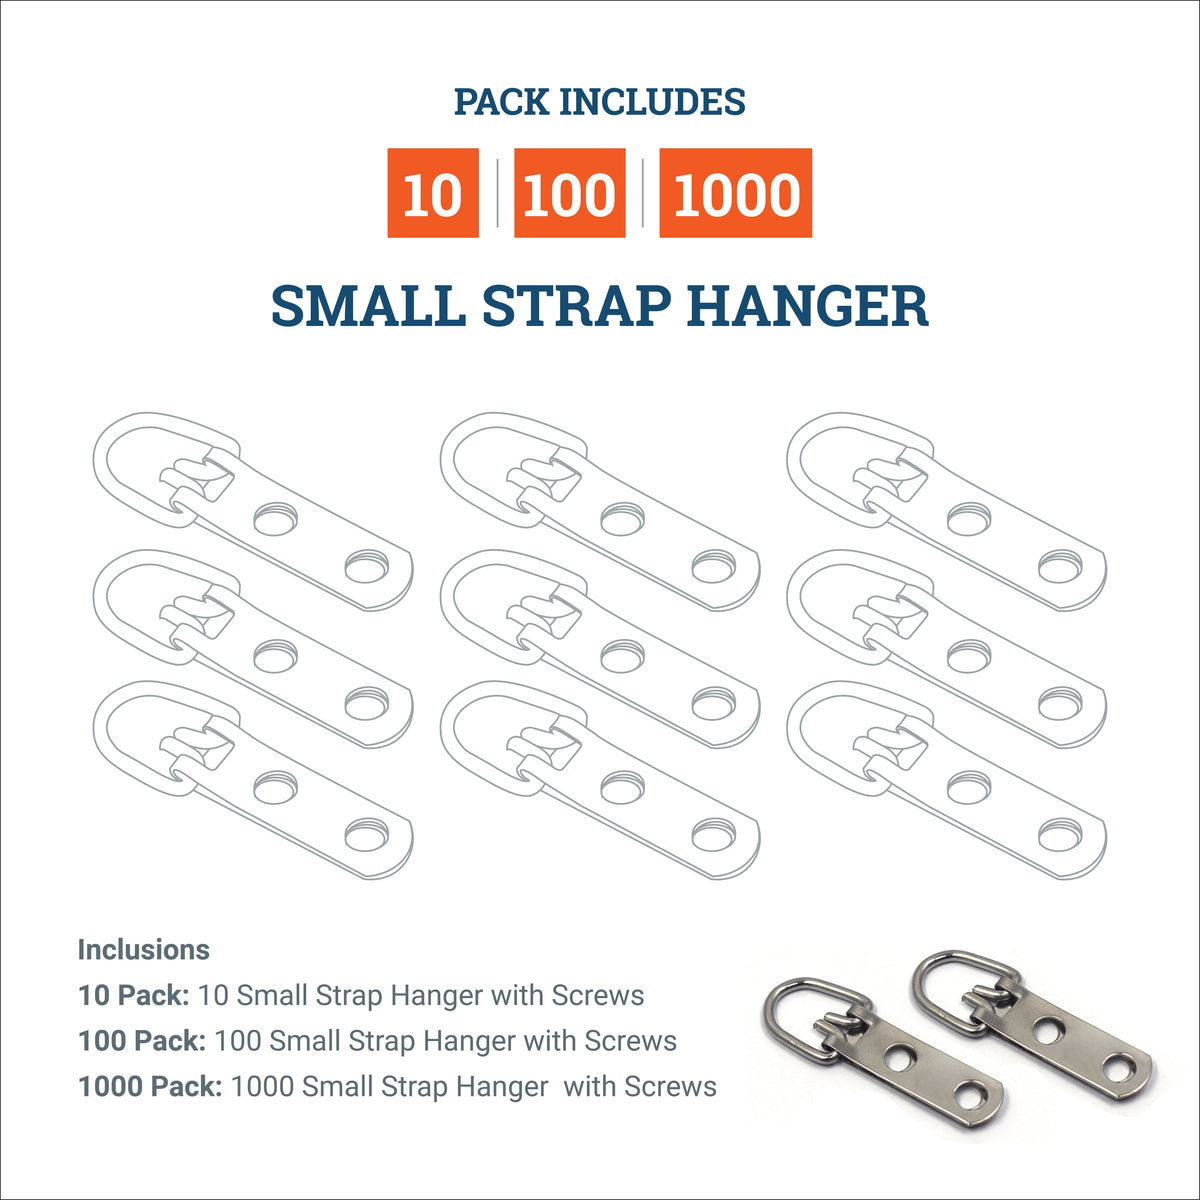 Small Strap Hanger